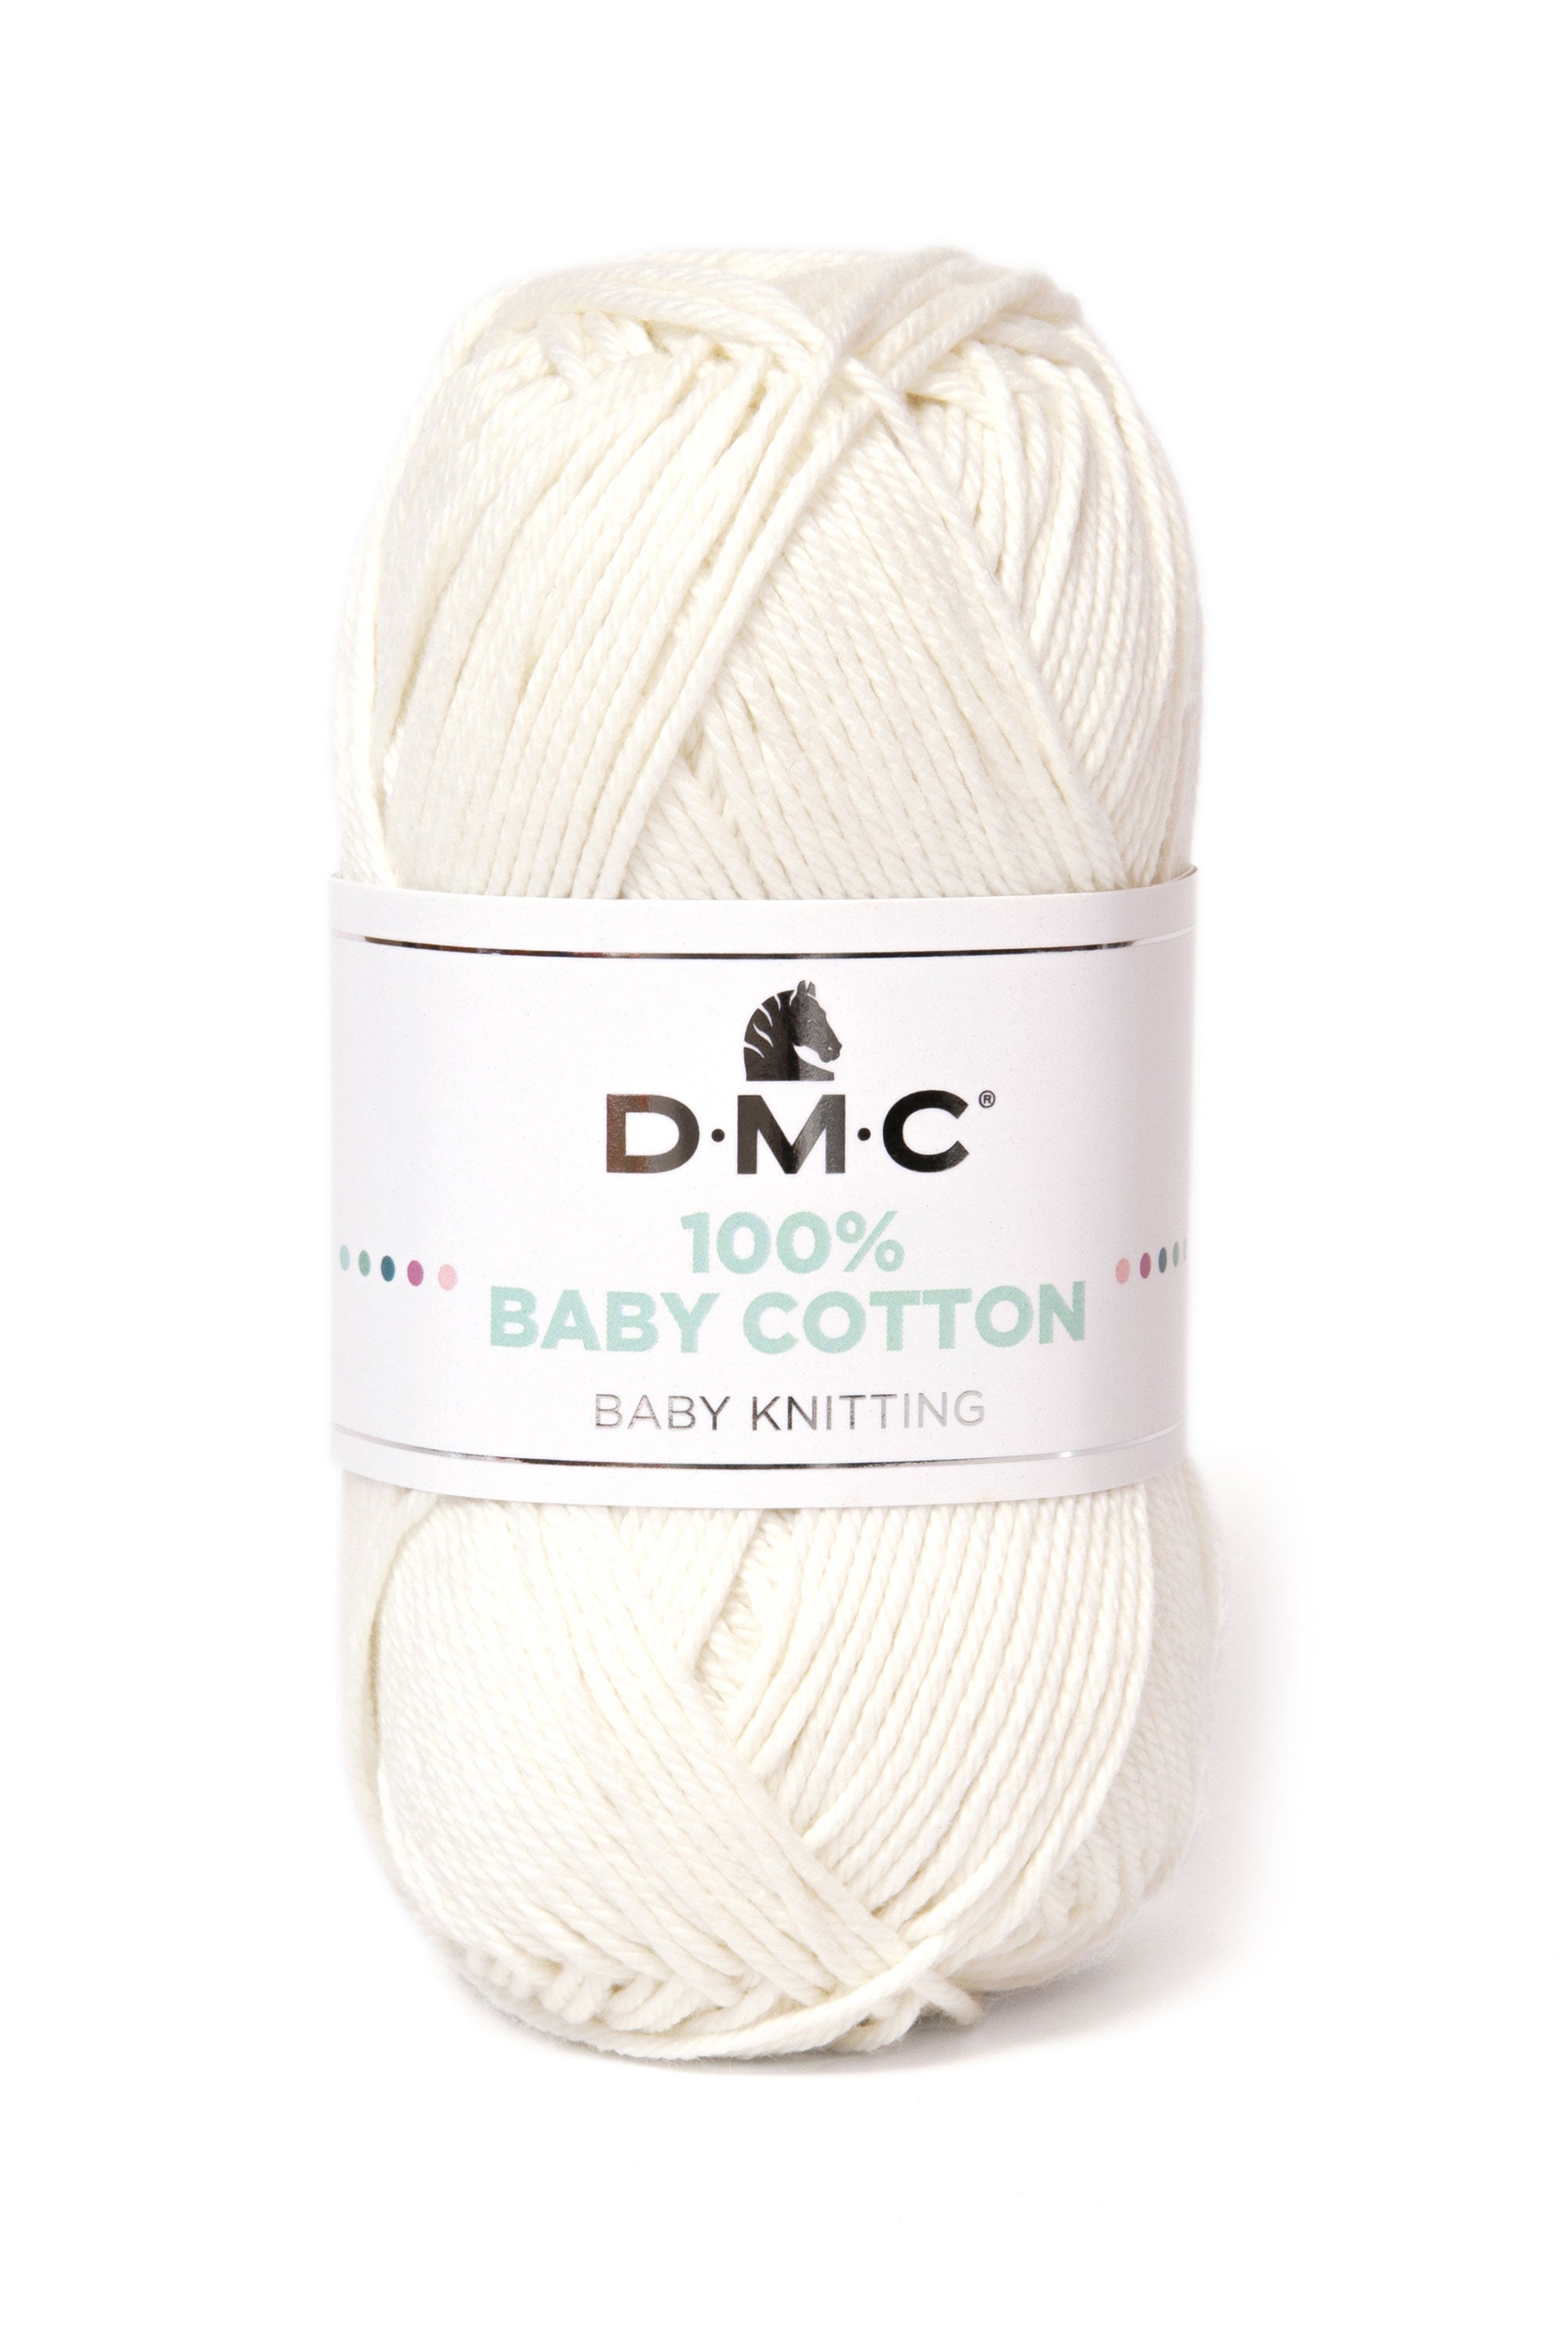 Lana Dmc 100% Baby Cotton Colore 761